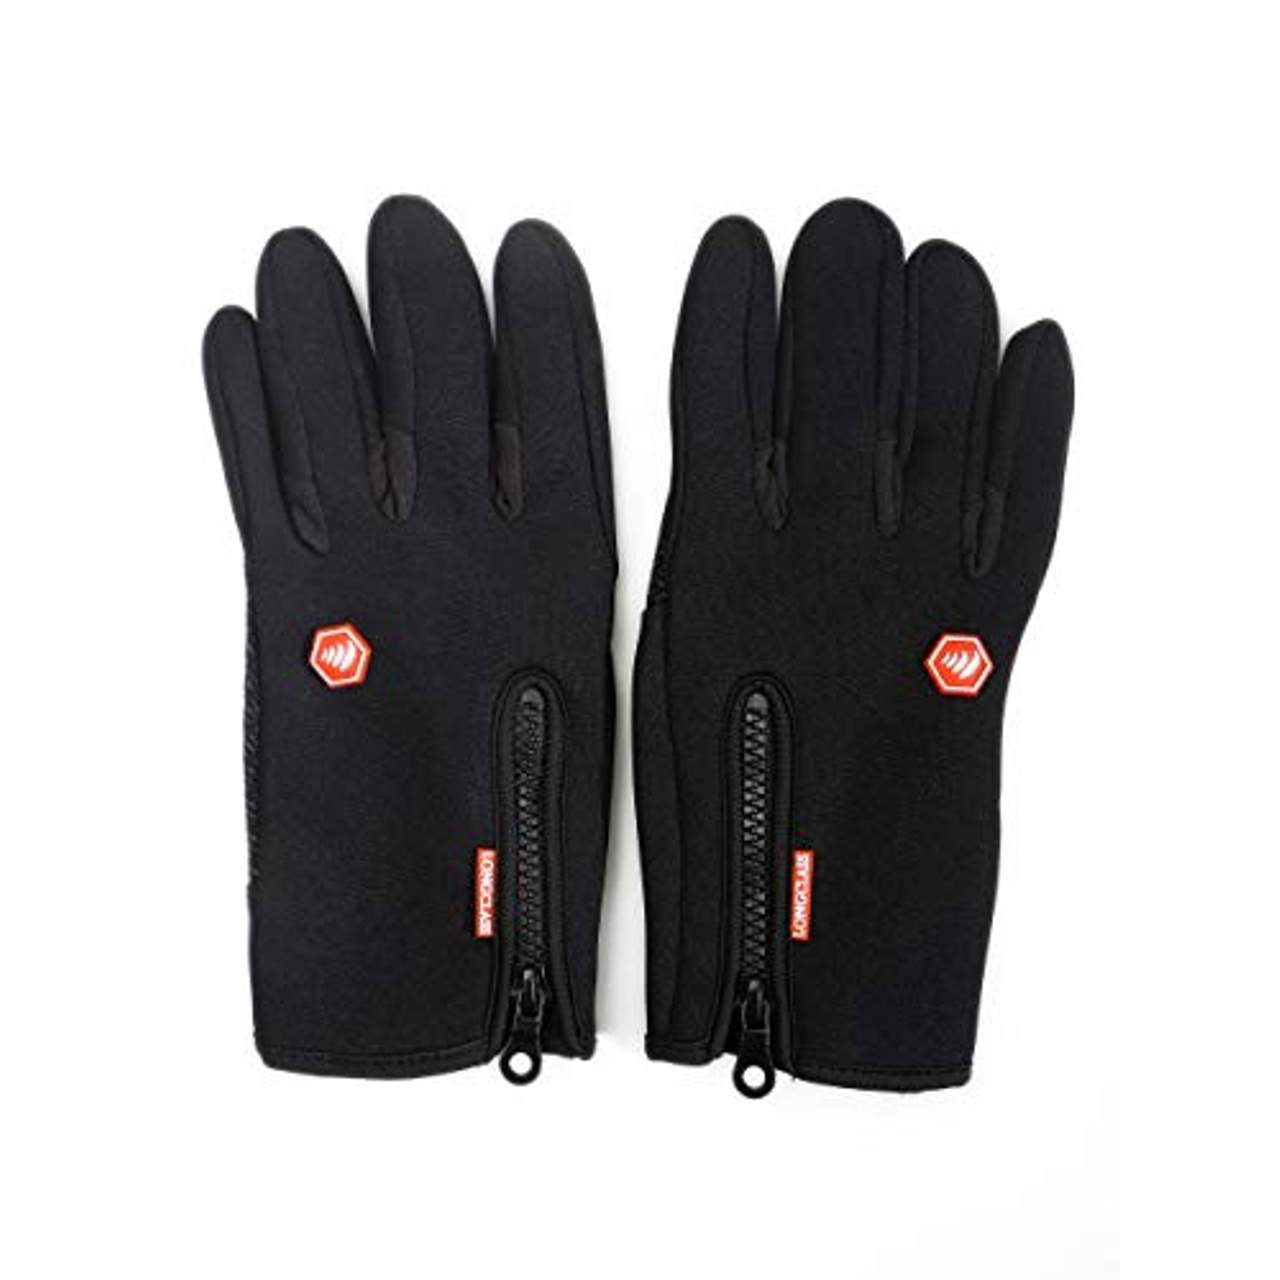 Nordic Walking Handschuhe Damen schwarz Elasto Training